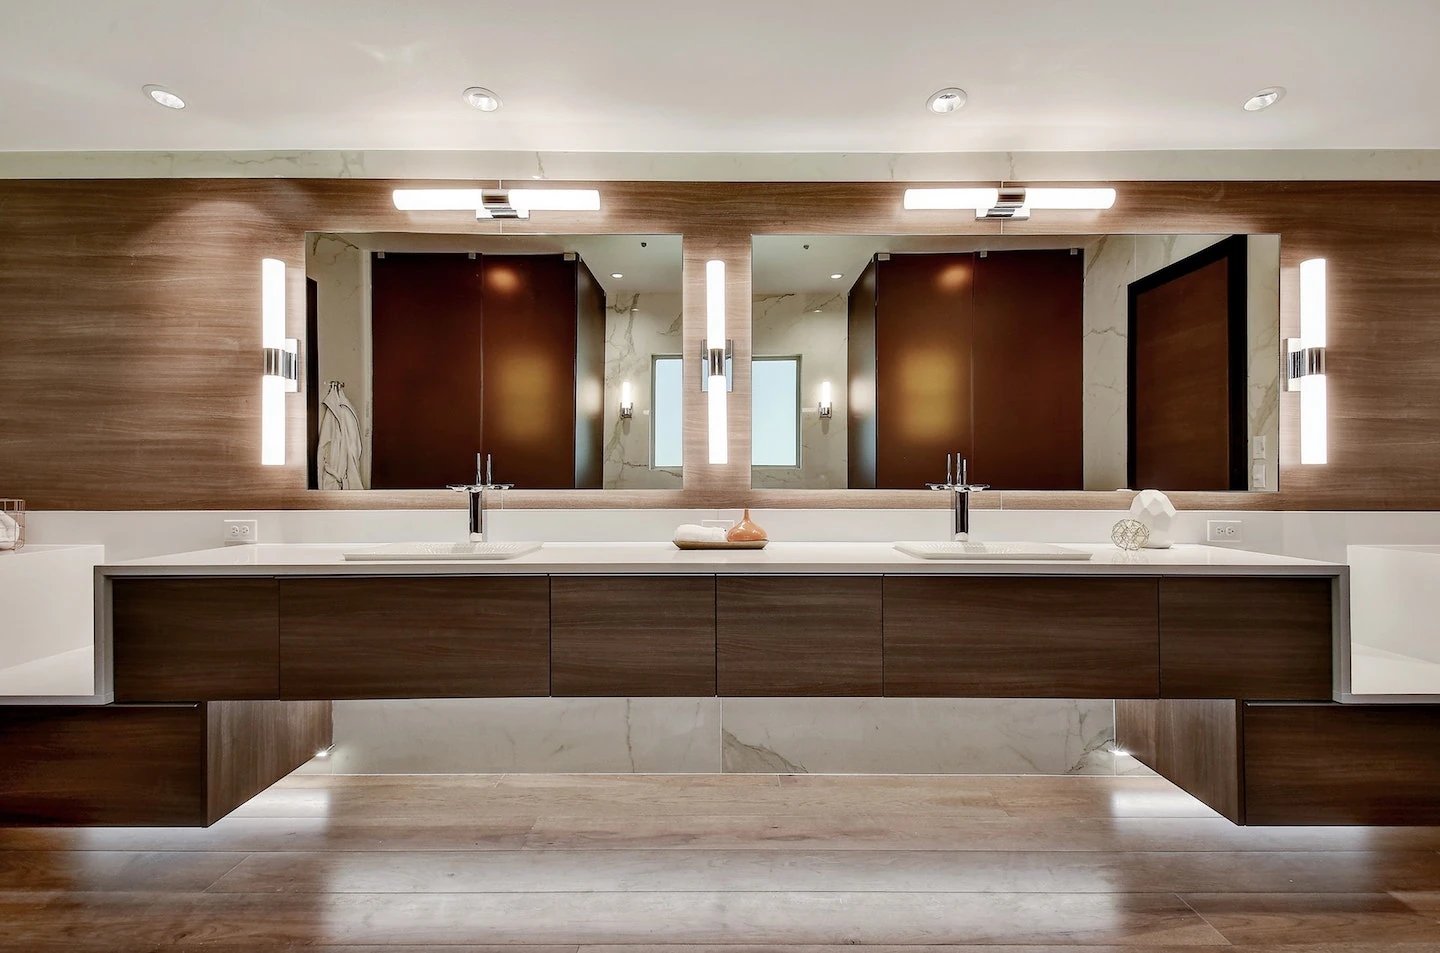 Custom bathroom vanity with under cabinet lighting and mirror lighting.